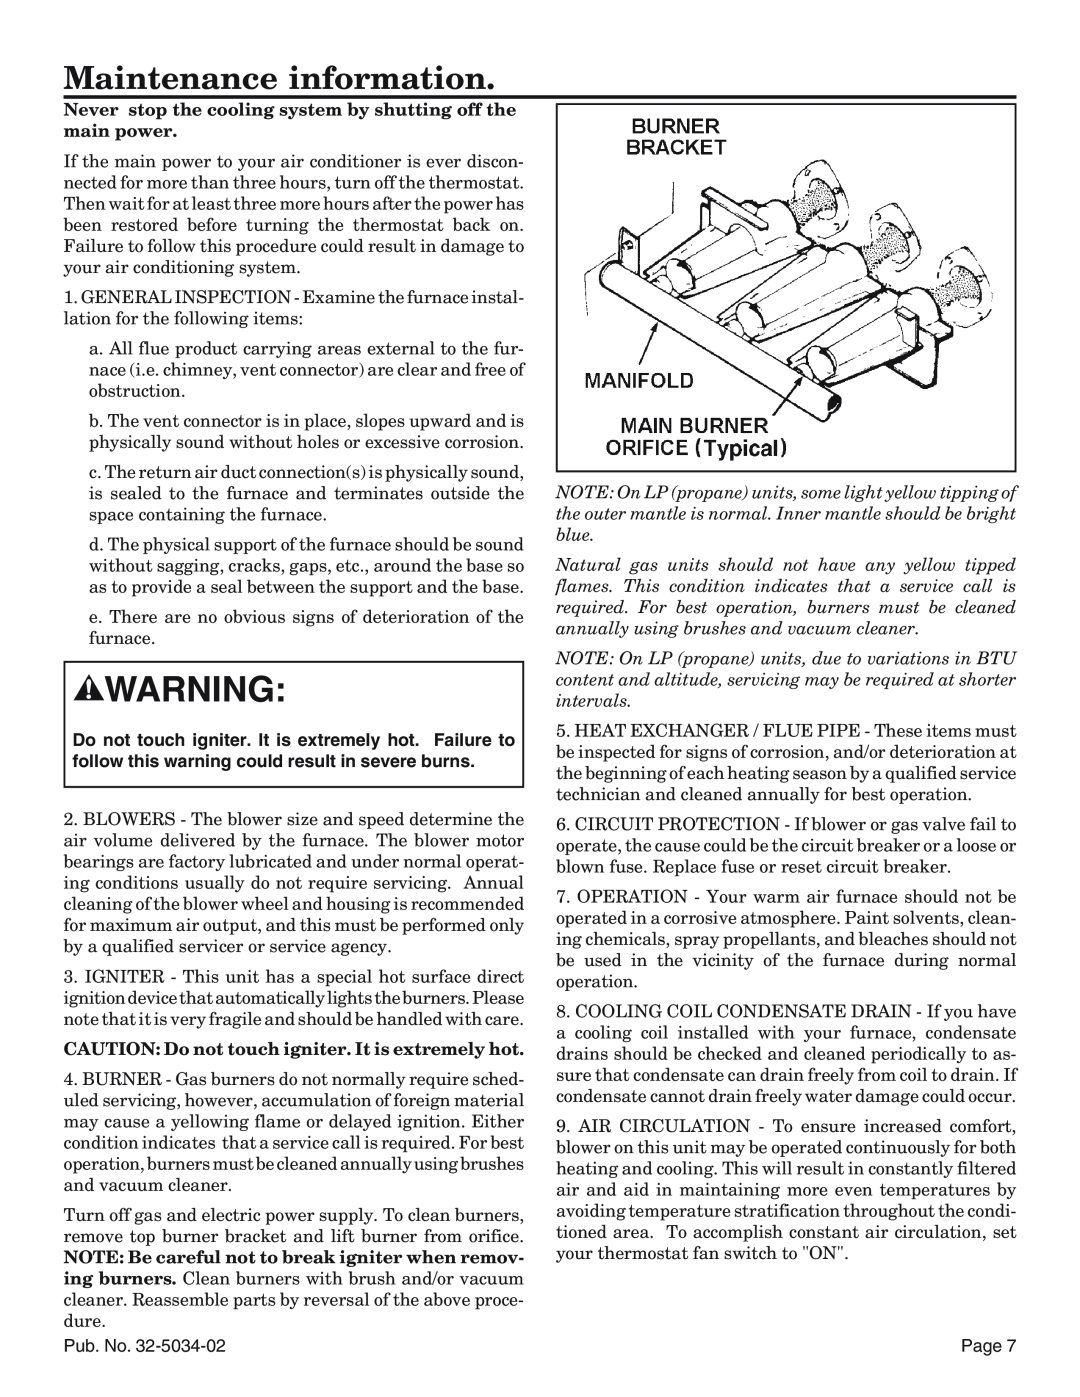 American Standard Noncondensing Gas Furnaces manual Maintenance information, Pub. No, Page 